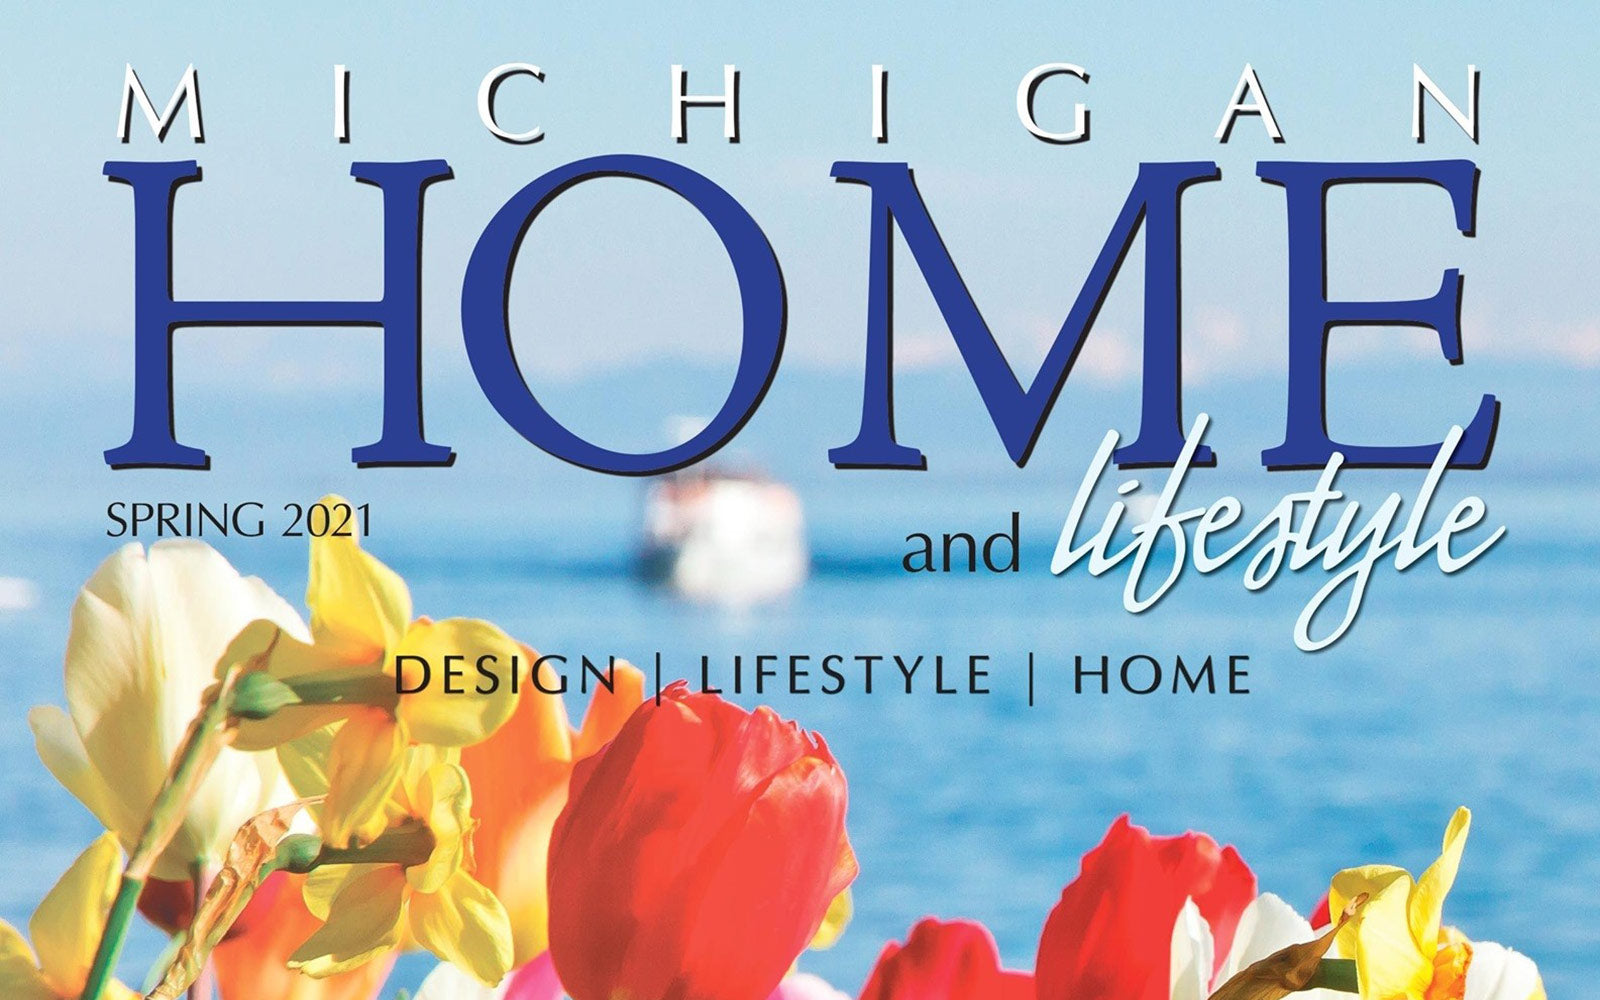 Bright Idea Featured in Michigan Home & Lifestyle